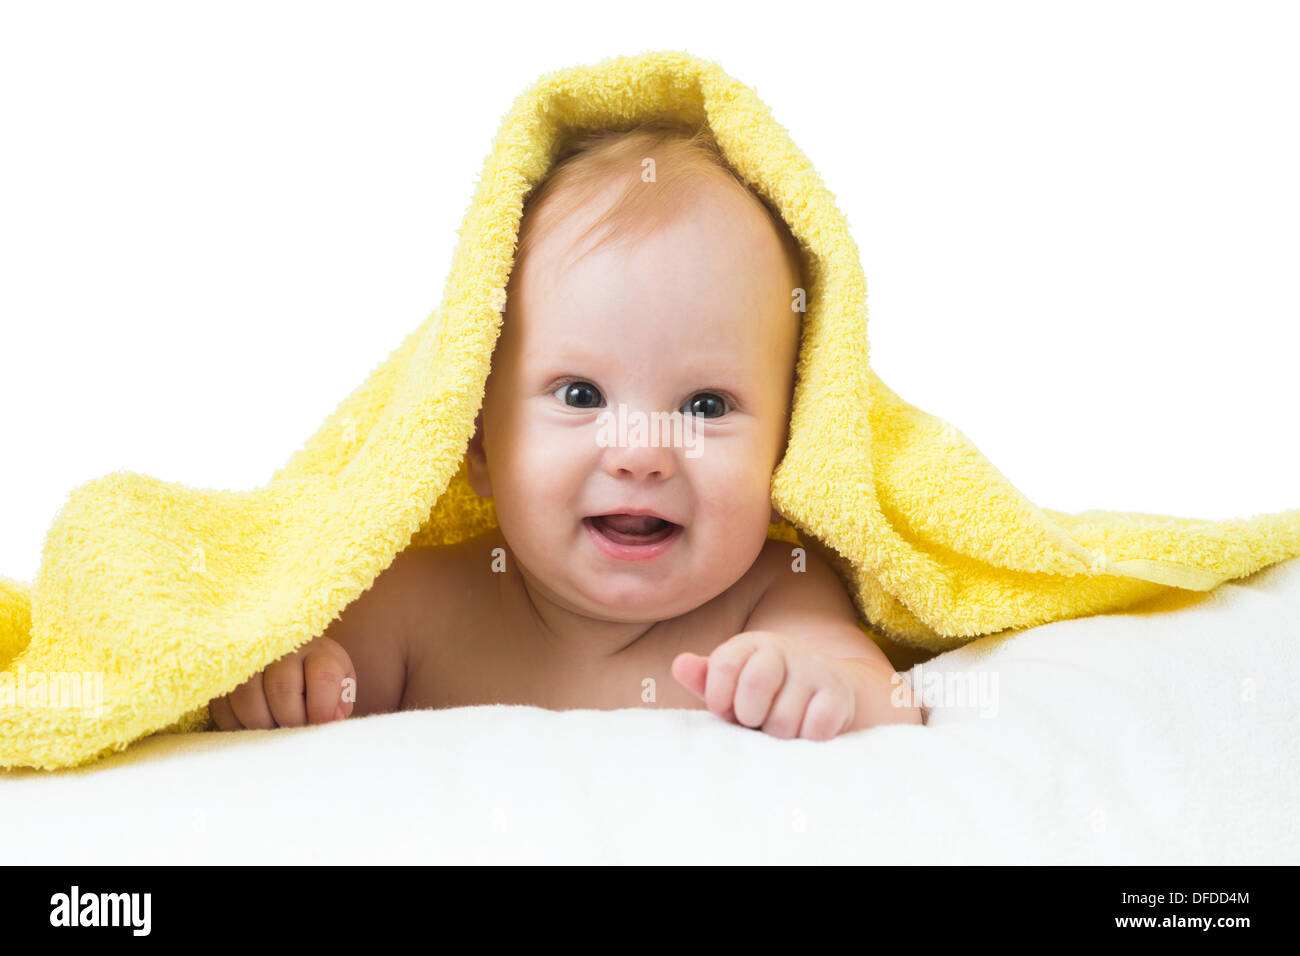 happy baby boy in towel Stock Photo - Alamy